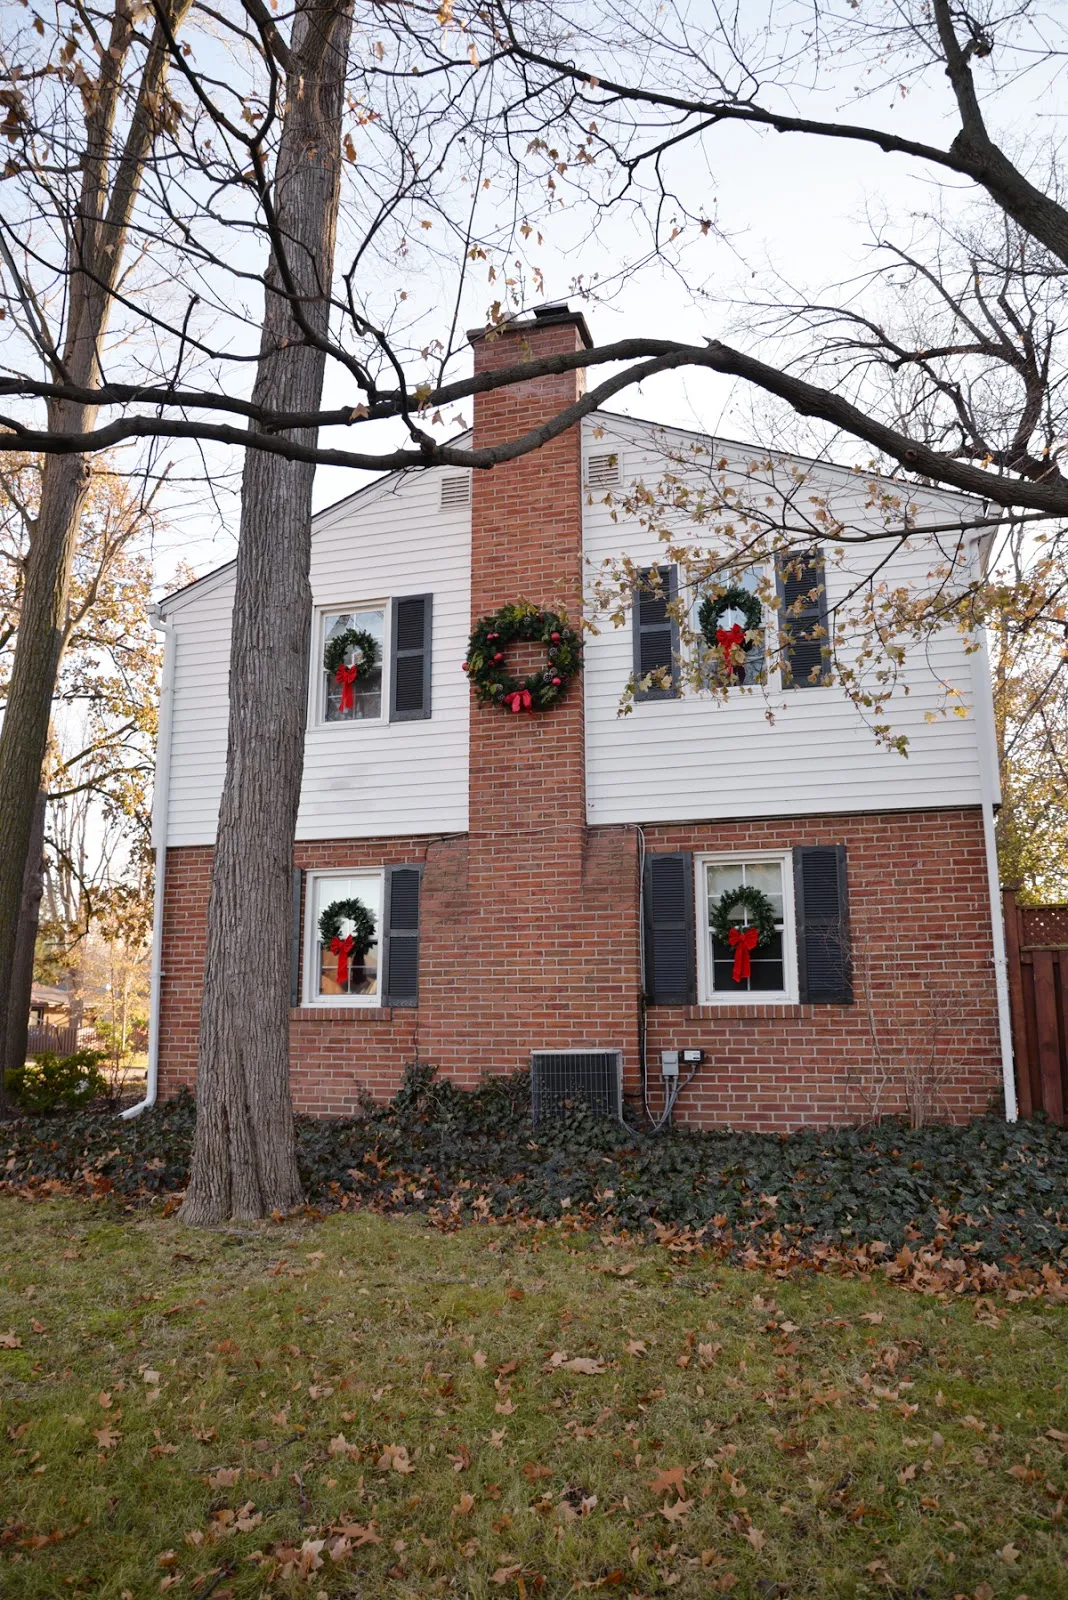 wreath on chimney, wreaths on windows, Christmas wreaths on exterior windows, Colonial house with wreaths in windows, wreath on chimney